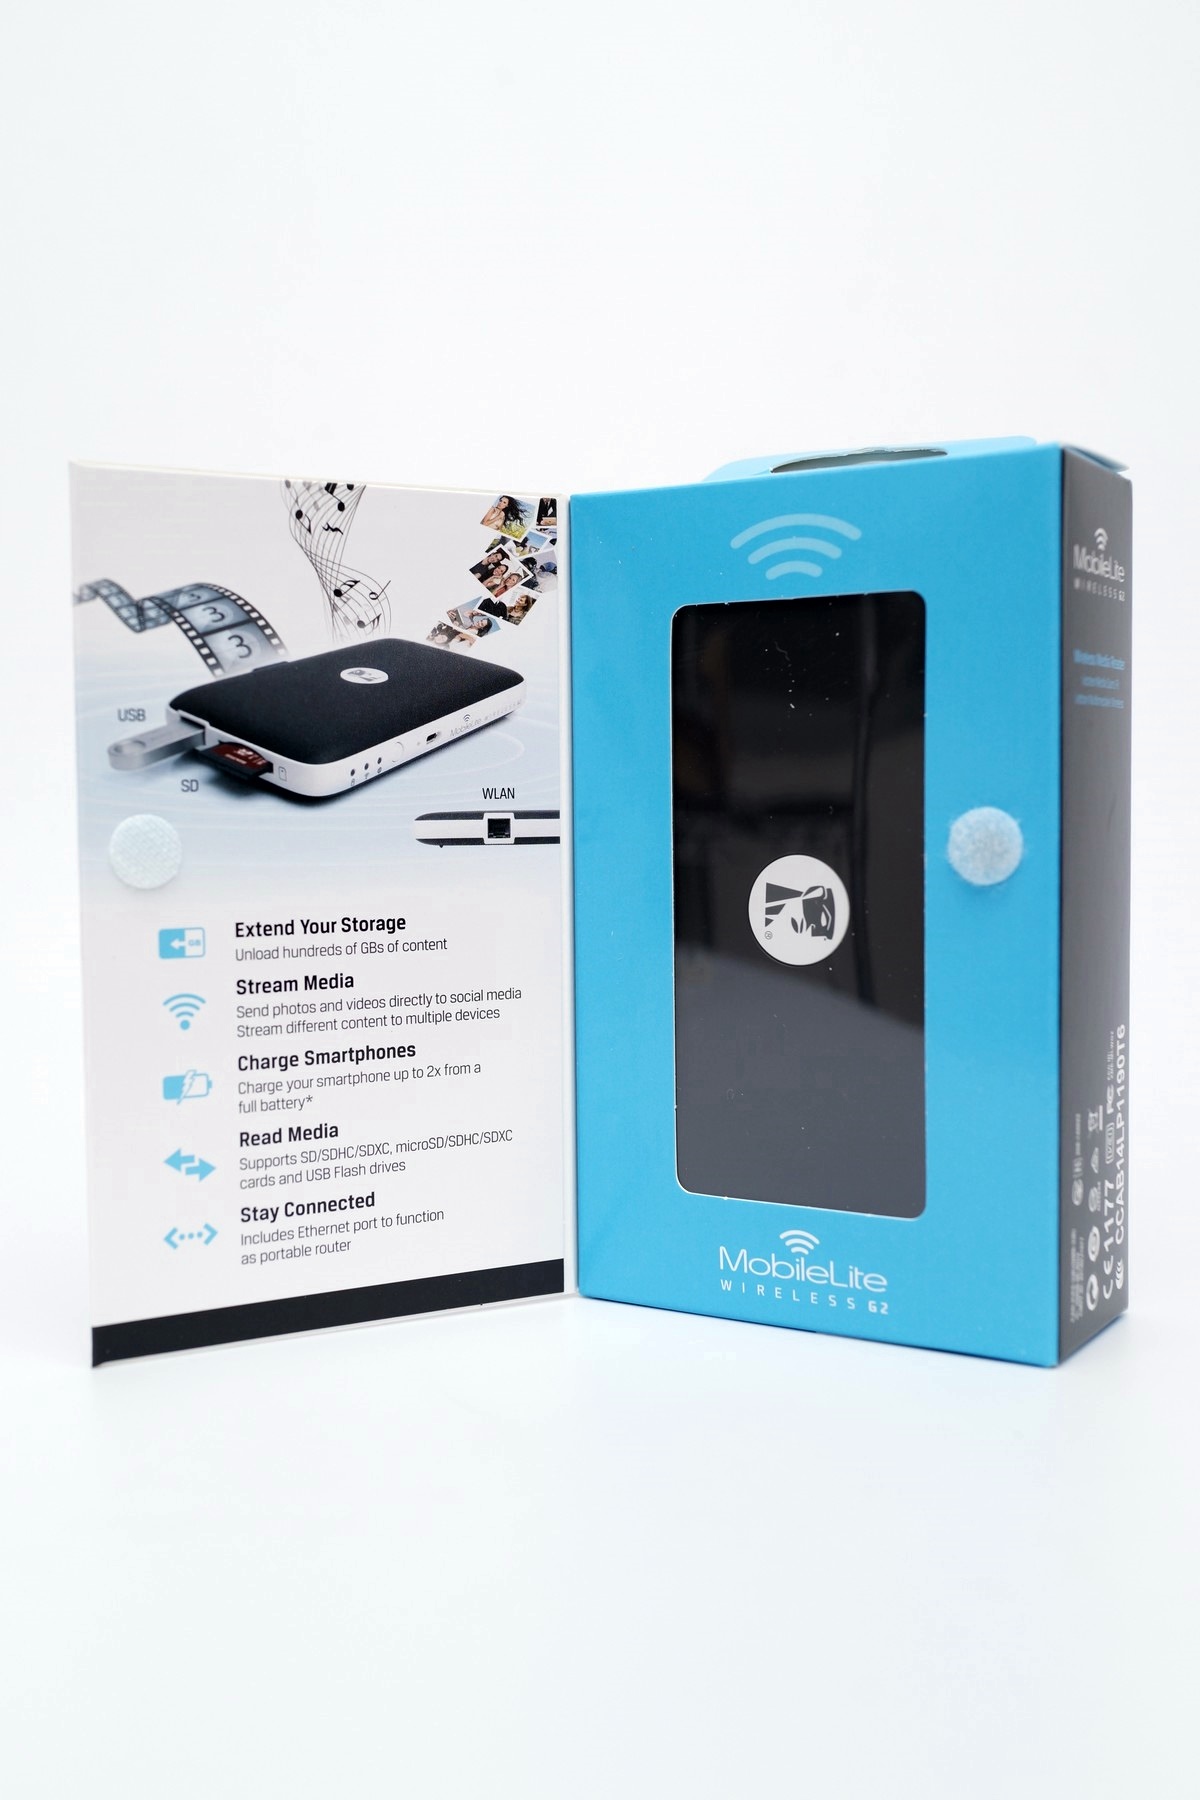 [XF] 進化設計 功能完備 隨身存取小幫手 Kingston MobileLite Wireless G2 無線讀卡機簡測